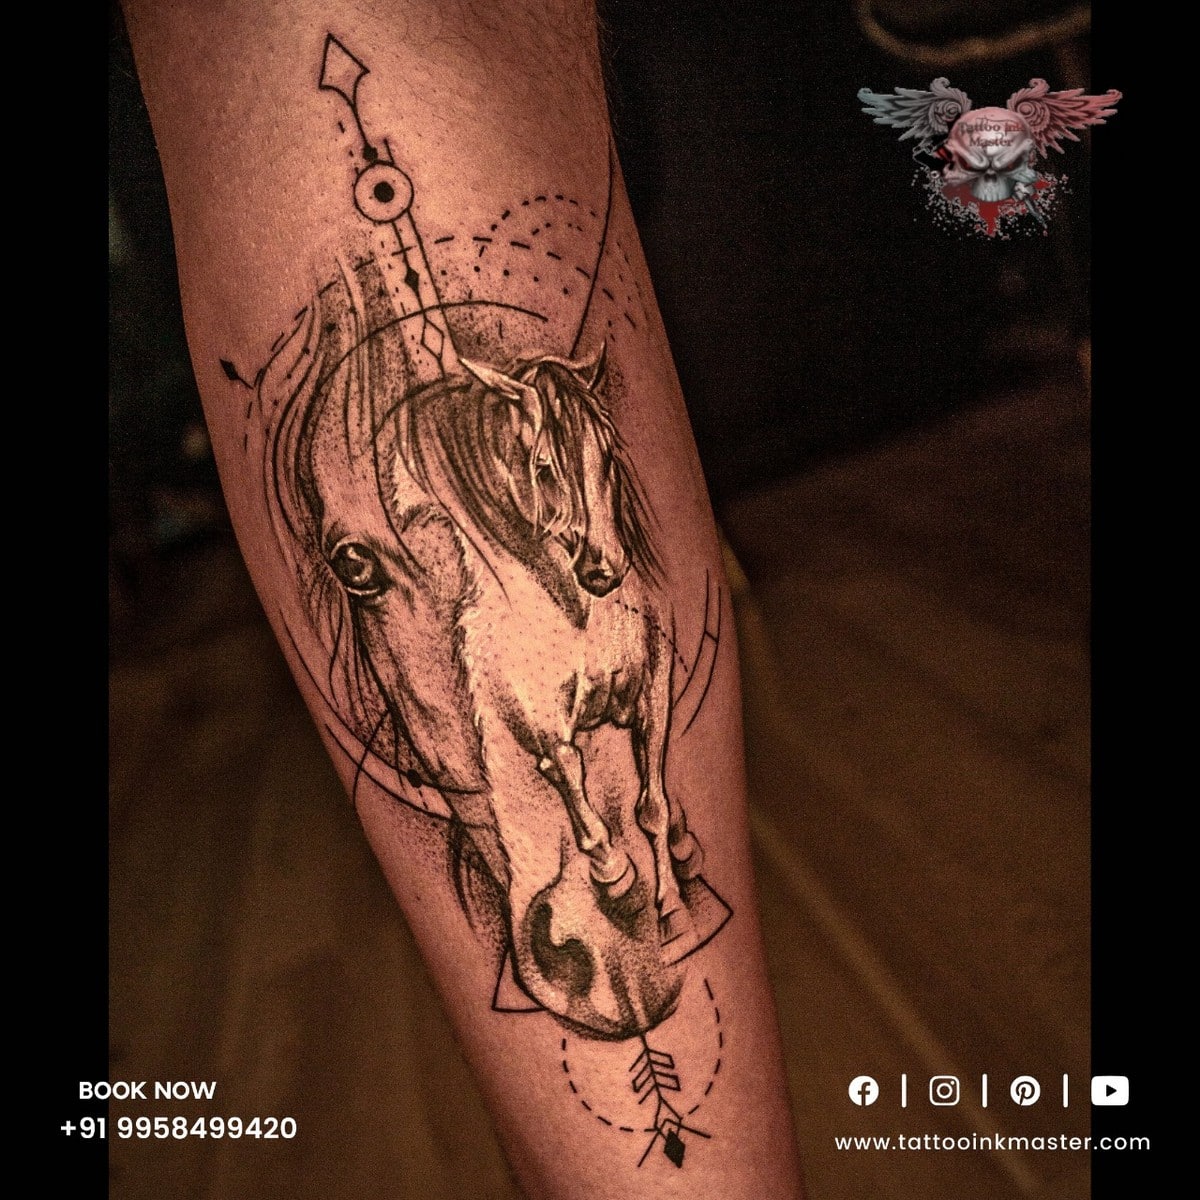 Incredible Looking Horse Facial Tattoo | Tattoo Ink Master